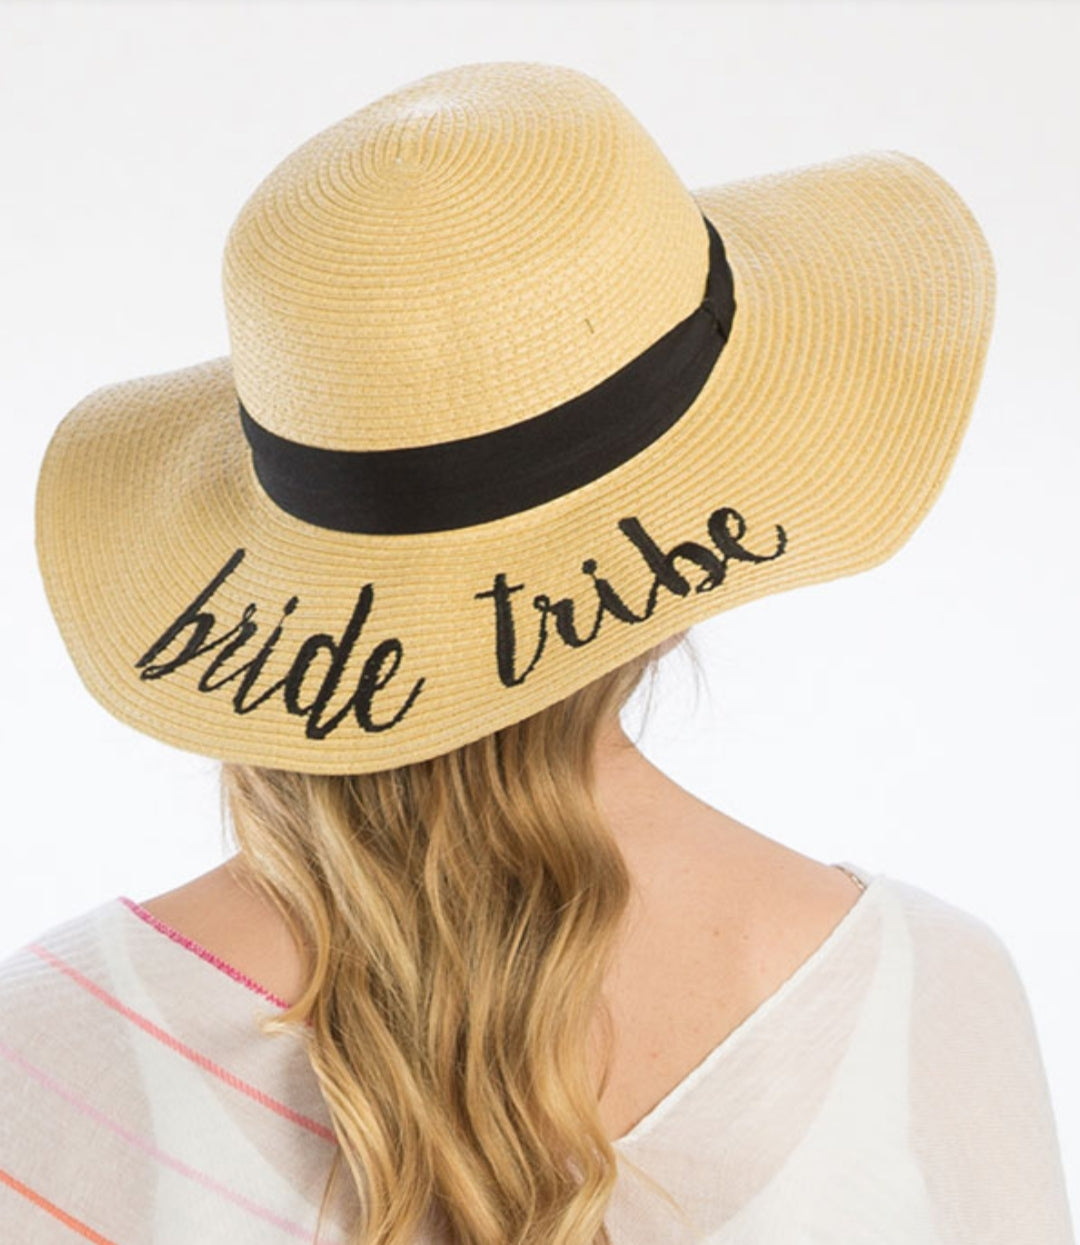 Bride & Tribe Straw Hat